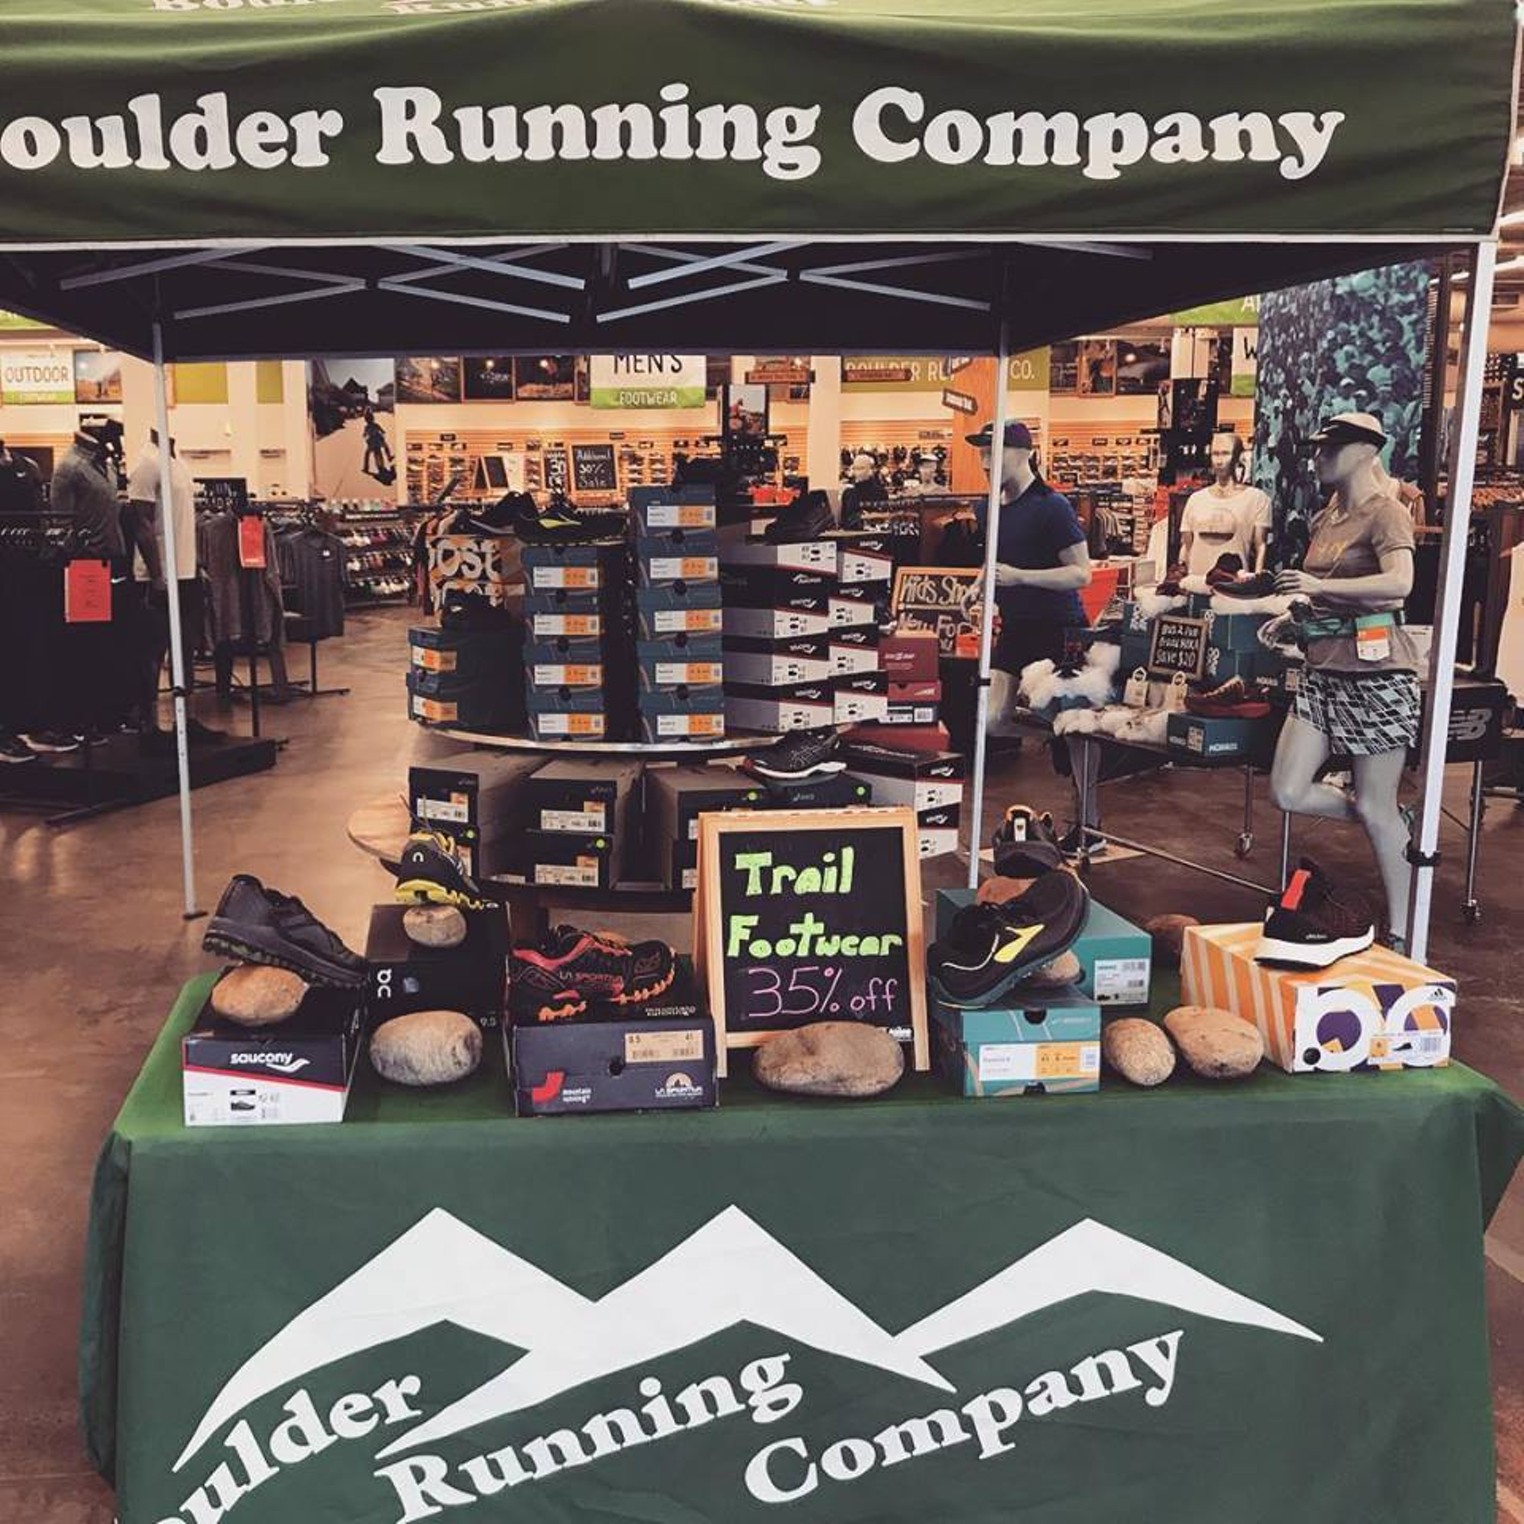 Best Running Store 2018 Boulder Running Company, Cherry Creek Best of Denver® Best Restaurants, Bars, Clubs, Music and Stores in Denver Westword photo